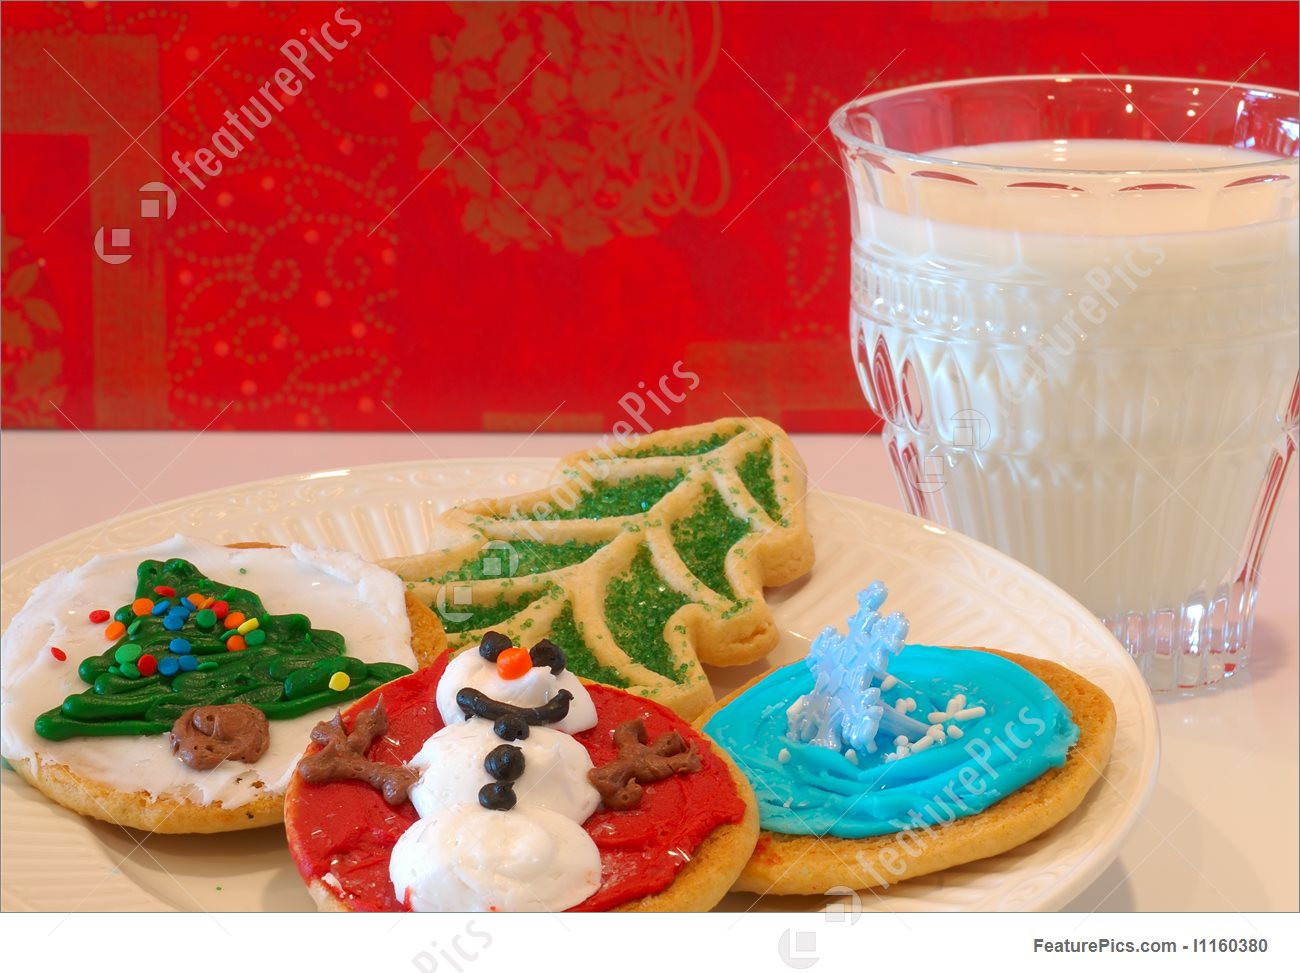 Christmas Milk And Cookies
 Christmas Cookies And Milk Image